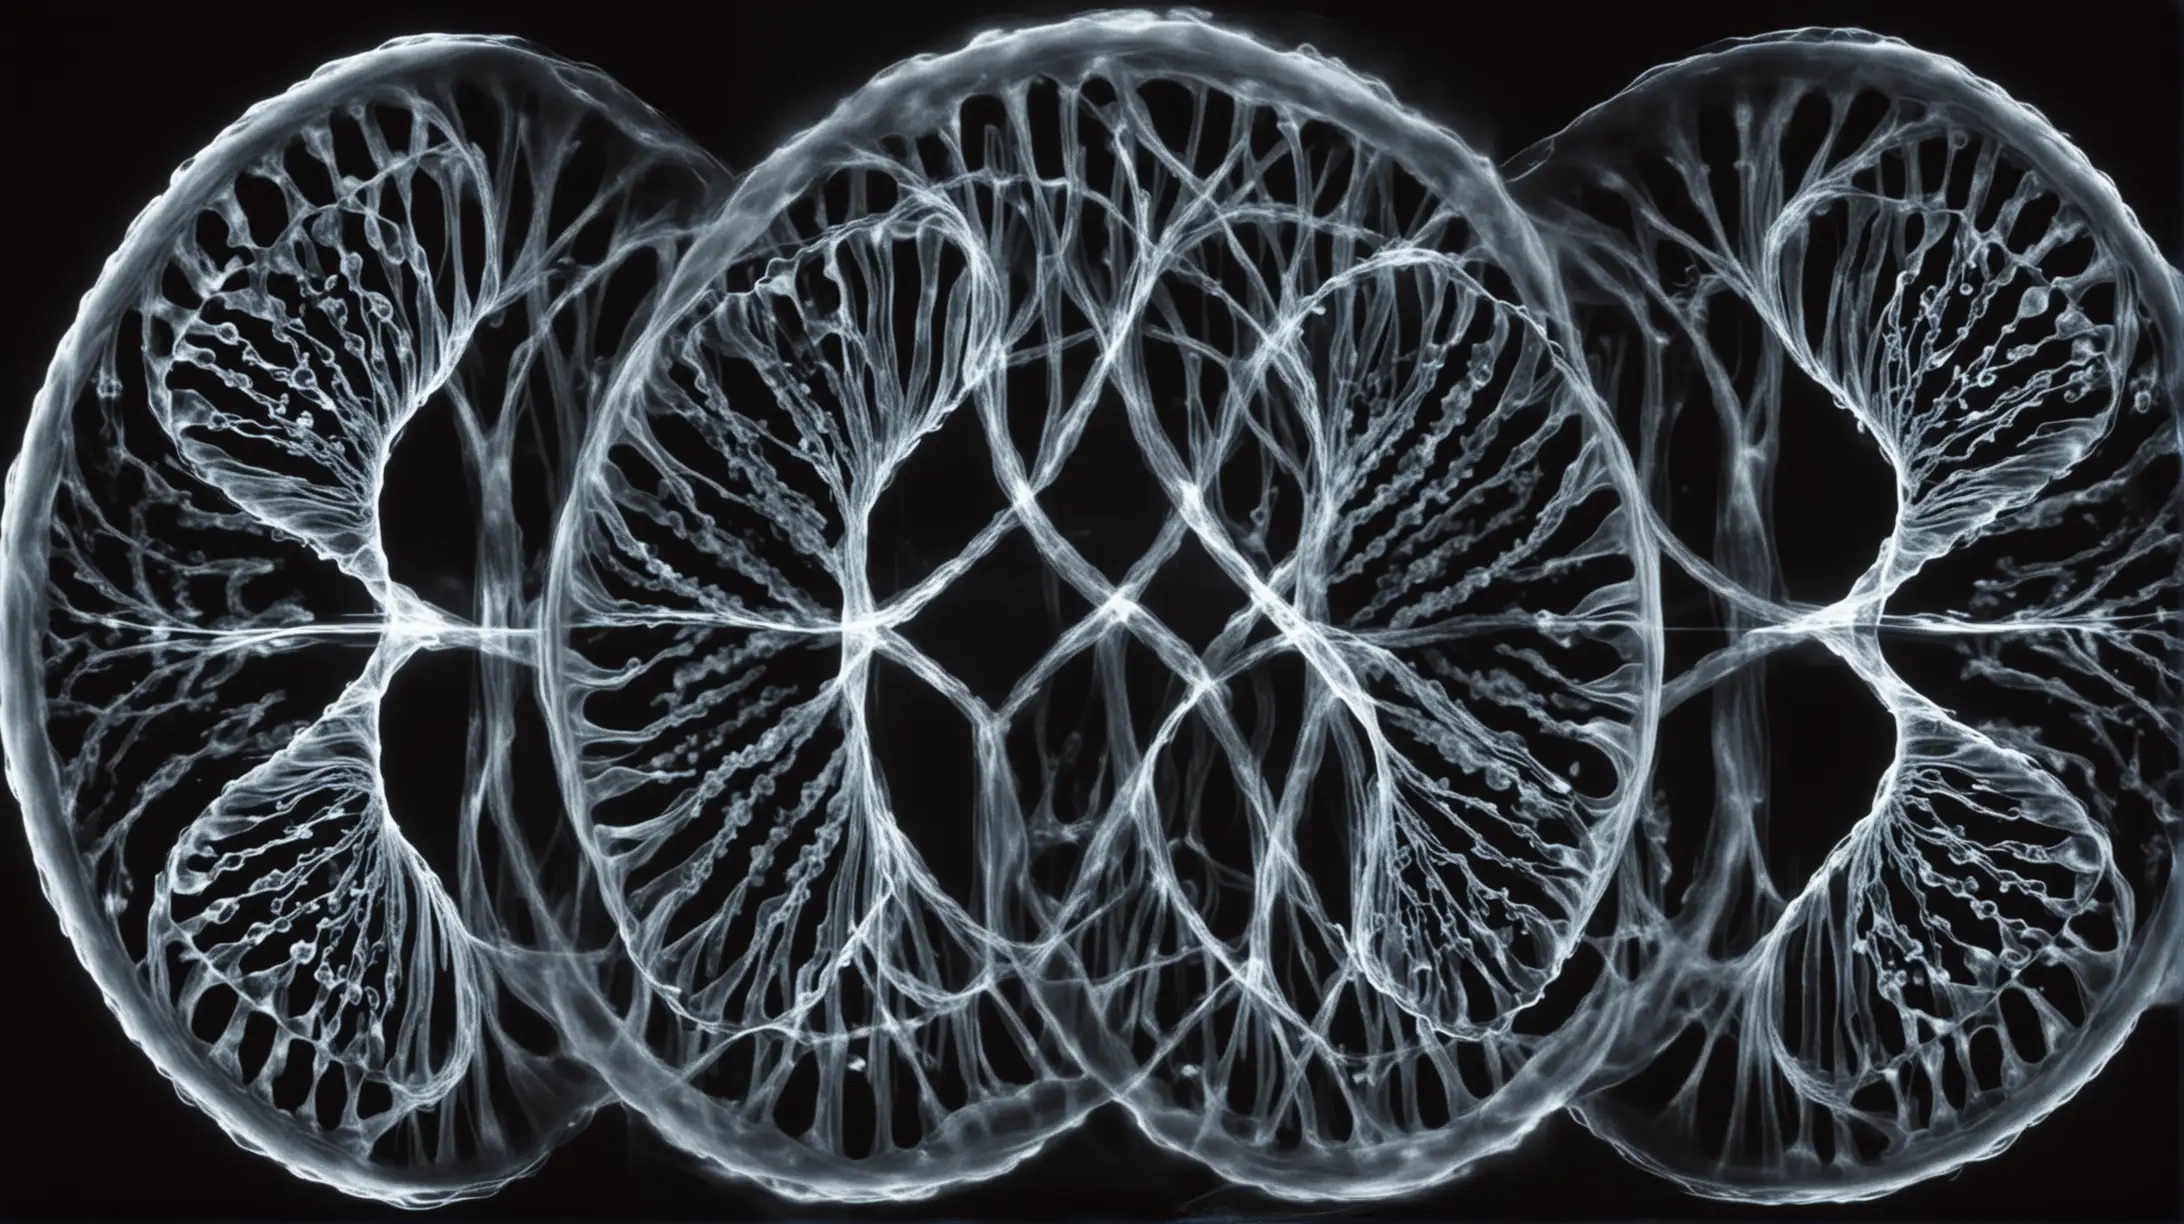 The DNA strand in cymatics